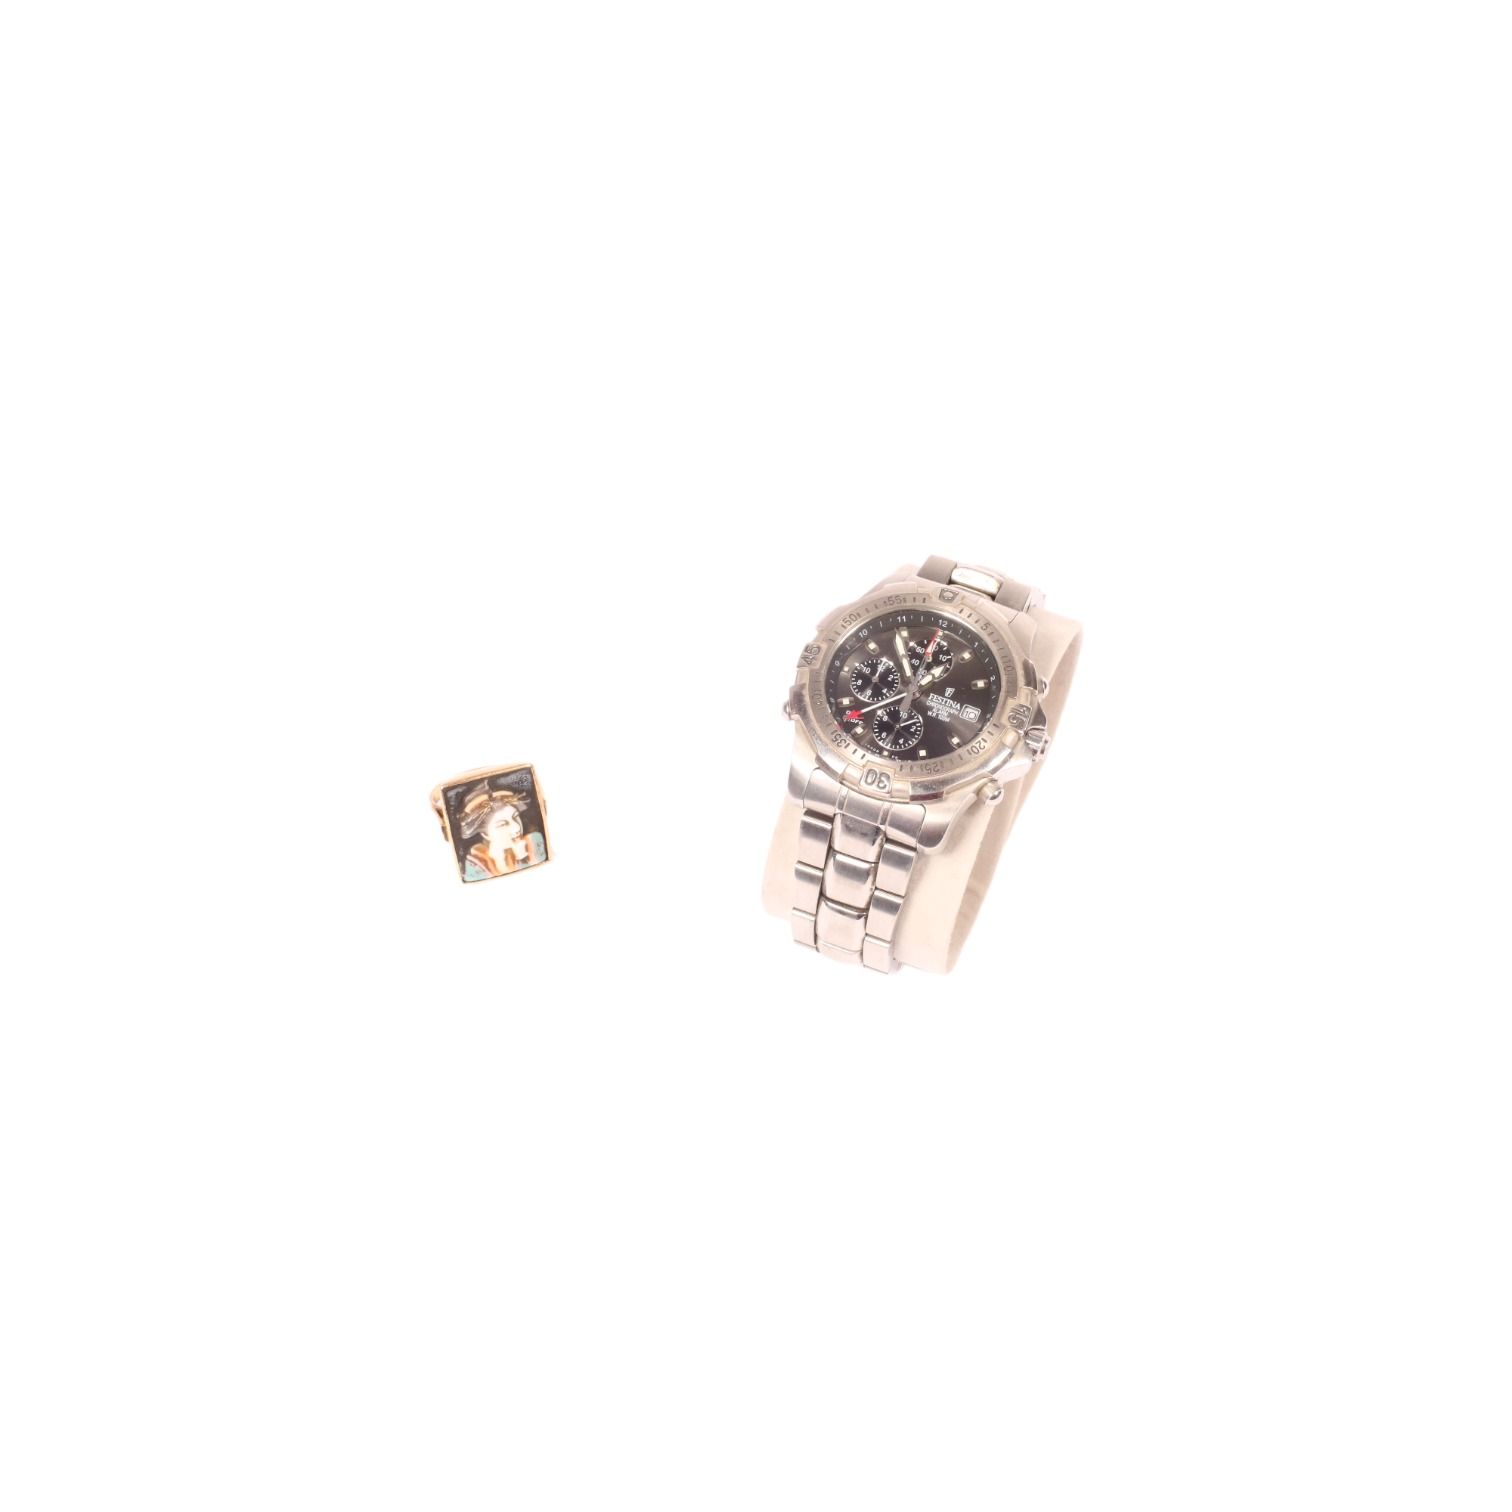 Null *18K黄金戒指上镶嵌着一个展示艺妓半身像的小瓷盘

TDD 55厘米左右

毛重：8克



FESTINA计时码表的表壳